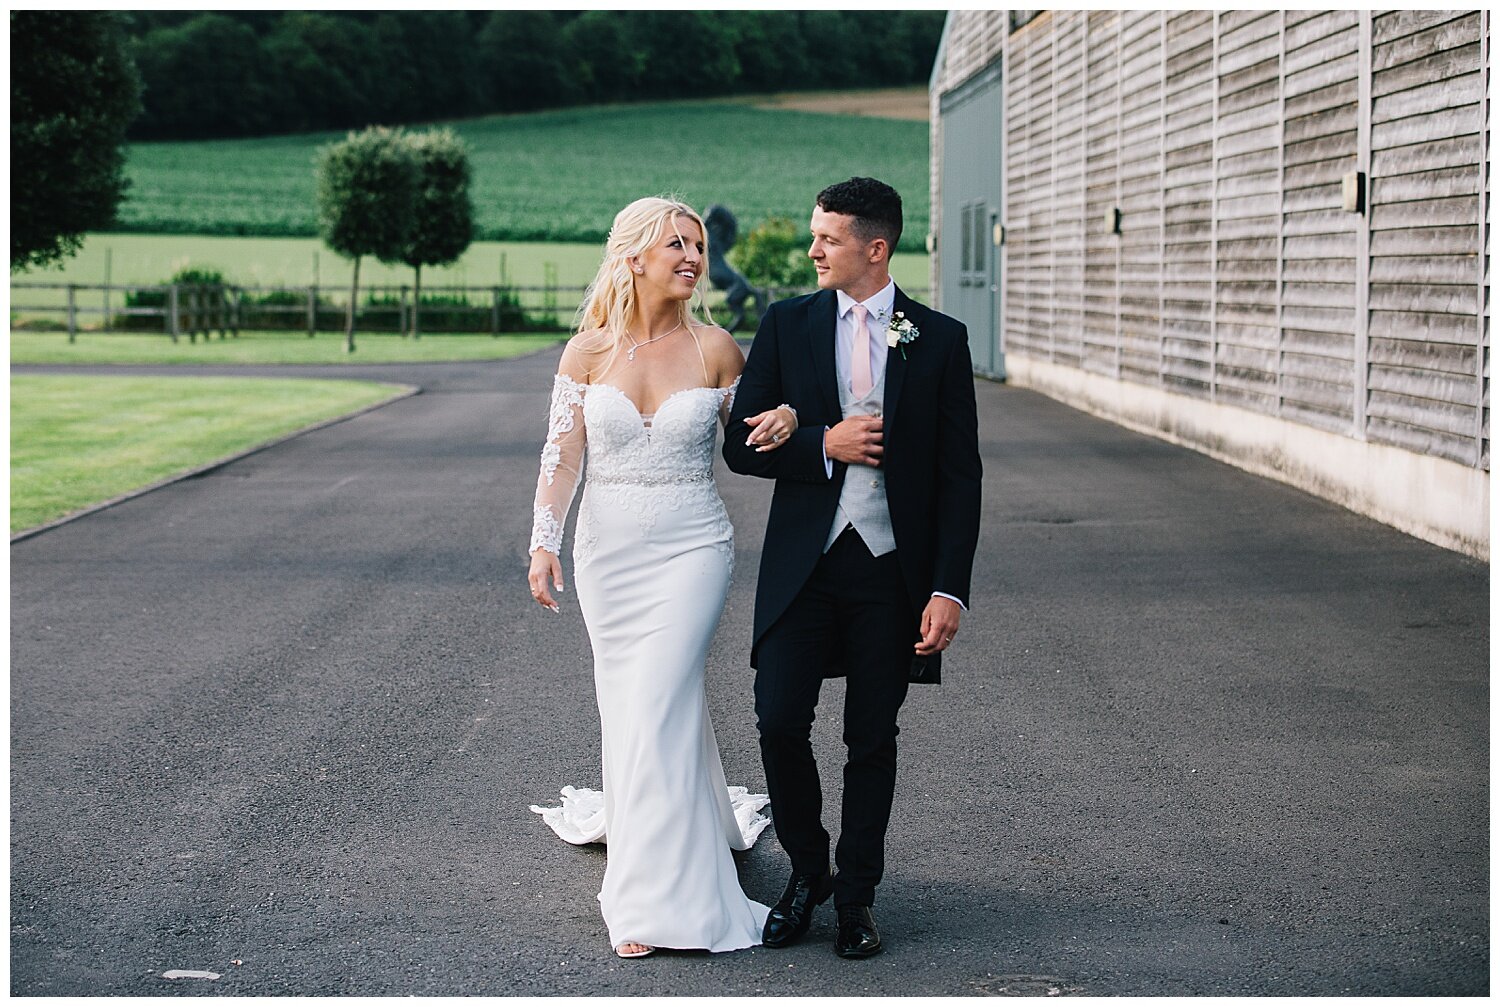 Ellie and Aled's white wedding salisbury 2021-08-18_0043.jpg